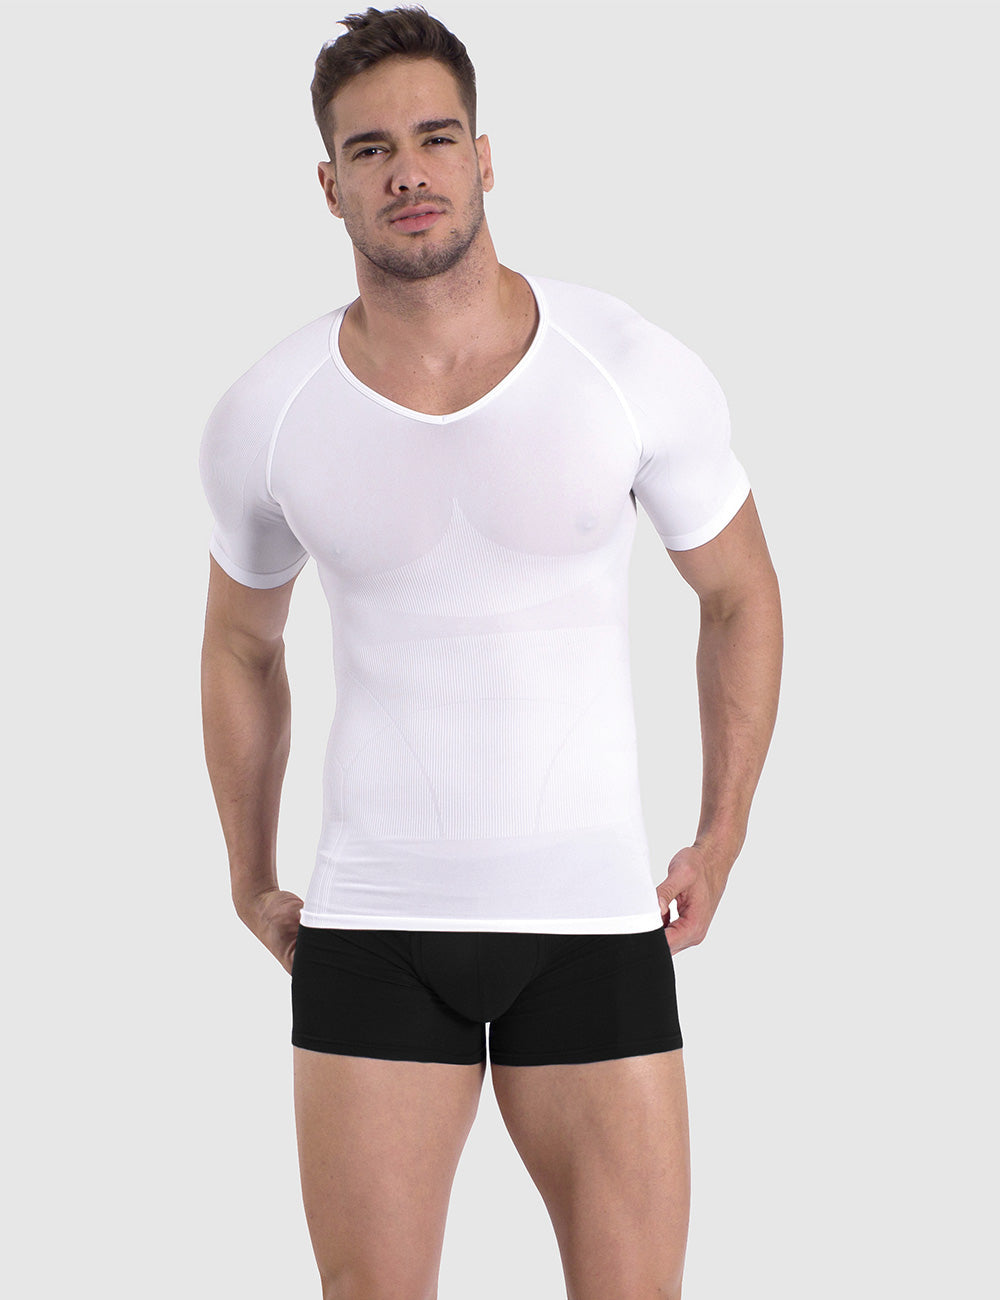 T-Shirt vests, excellent breathability, Seamless, black, Men's Underwear